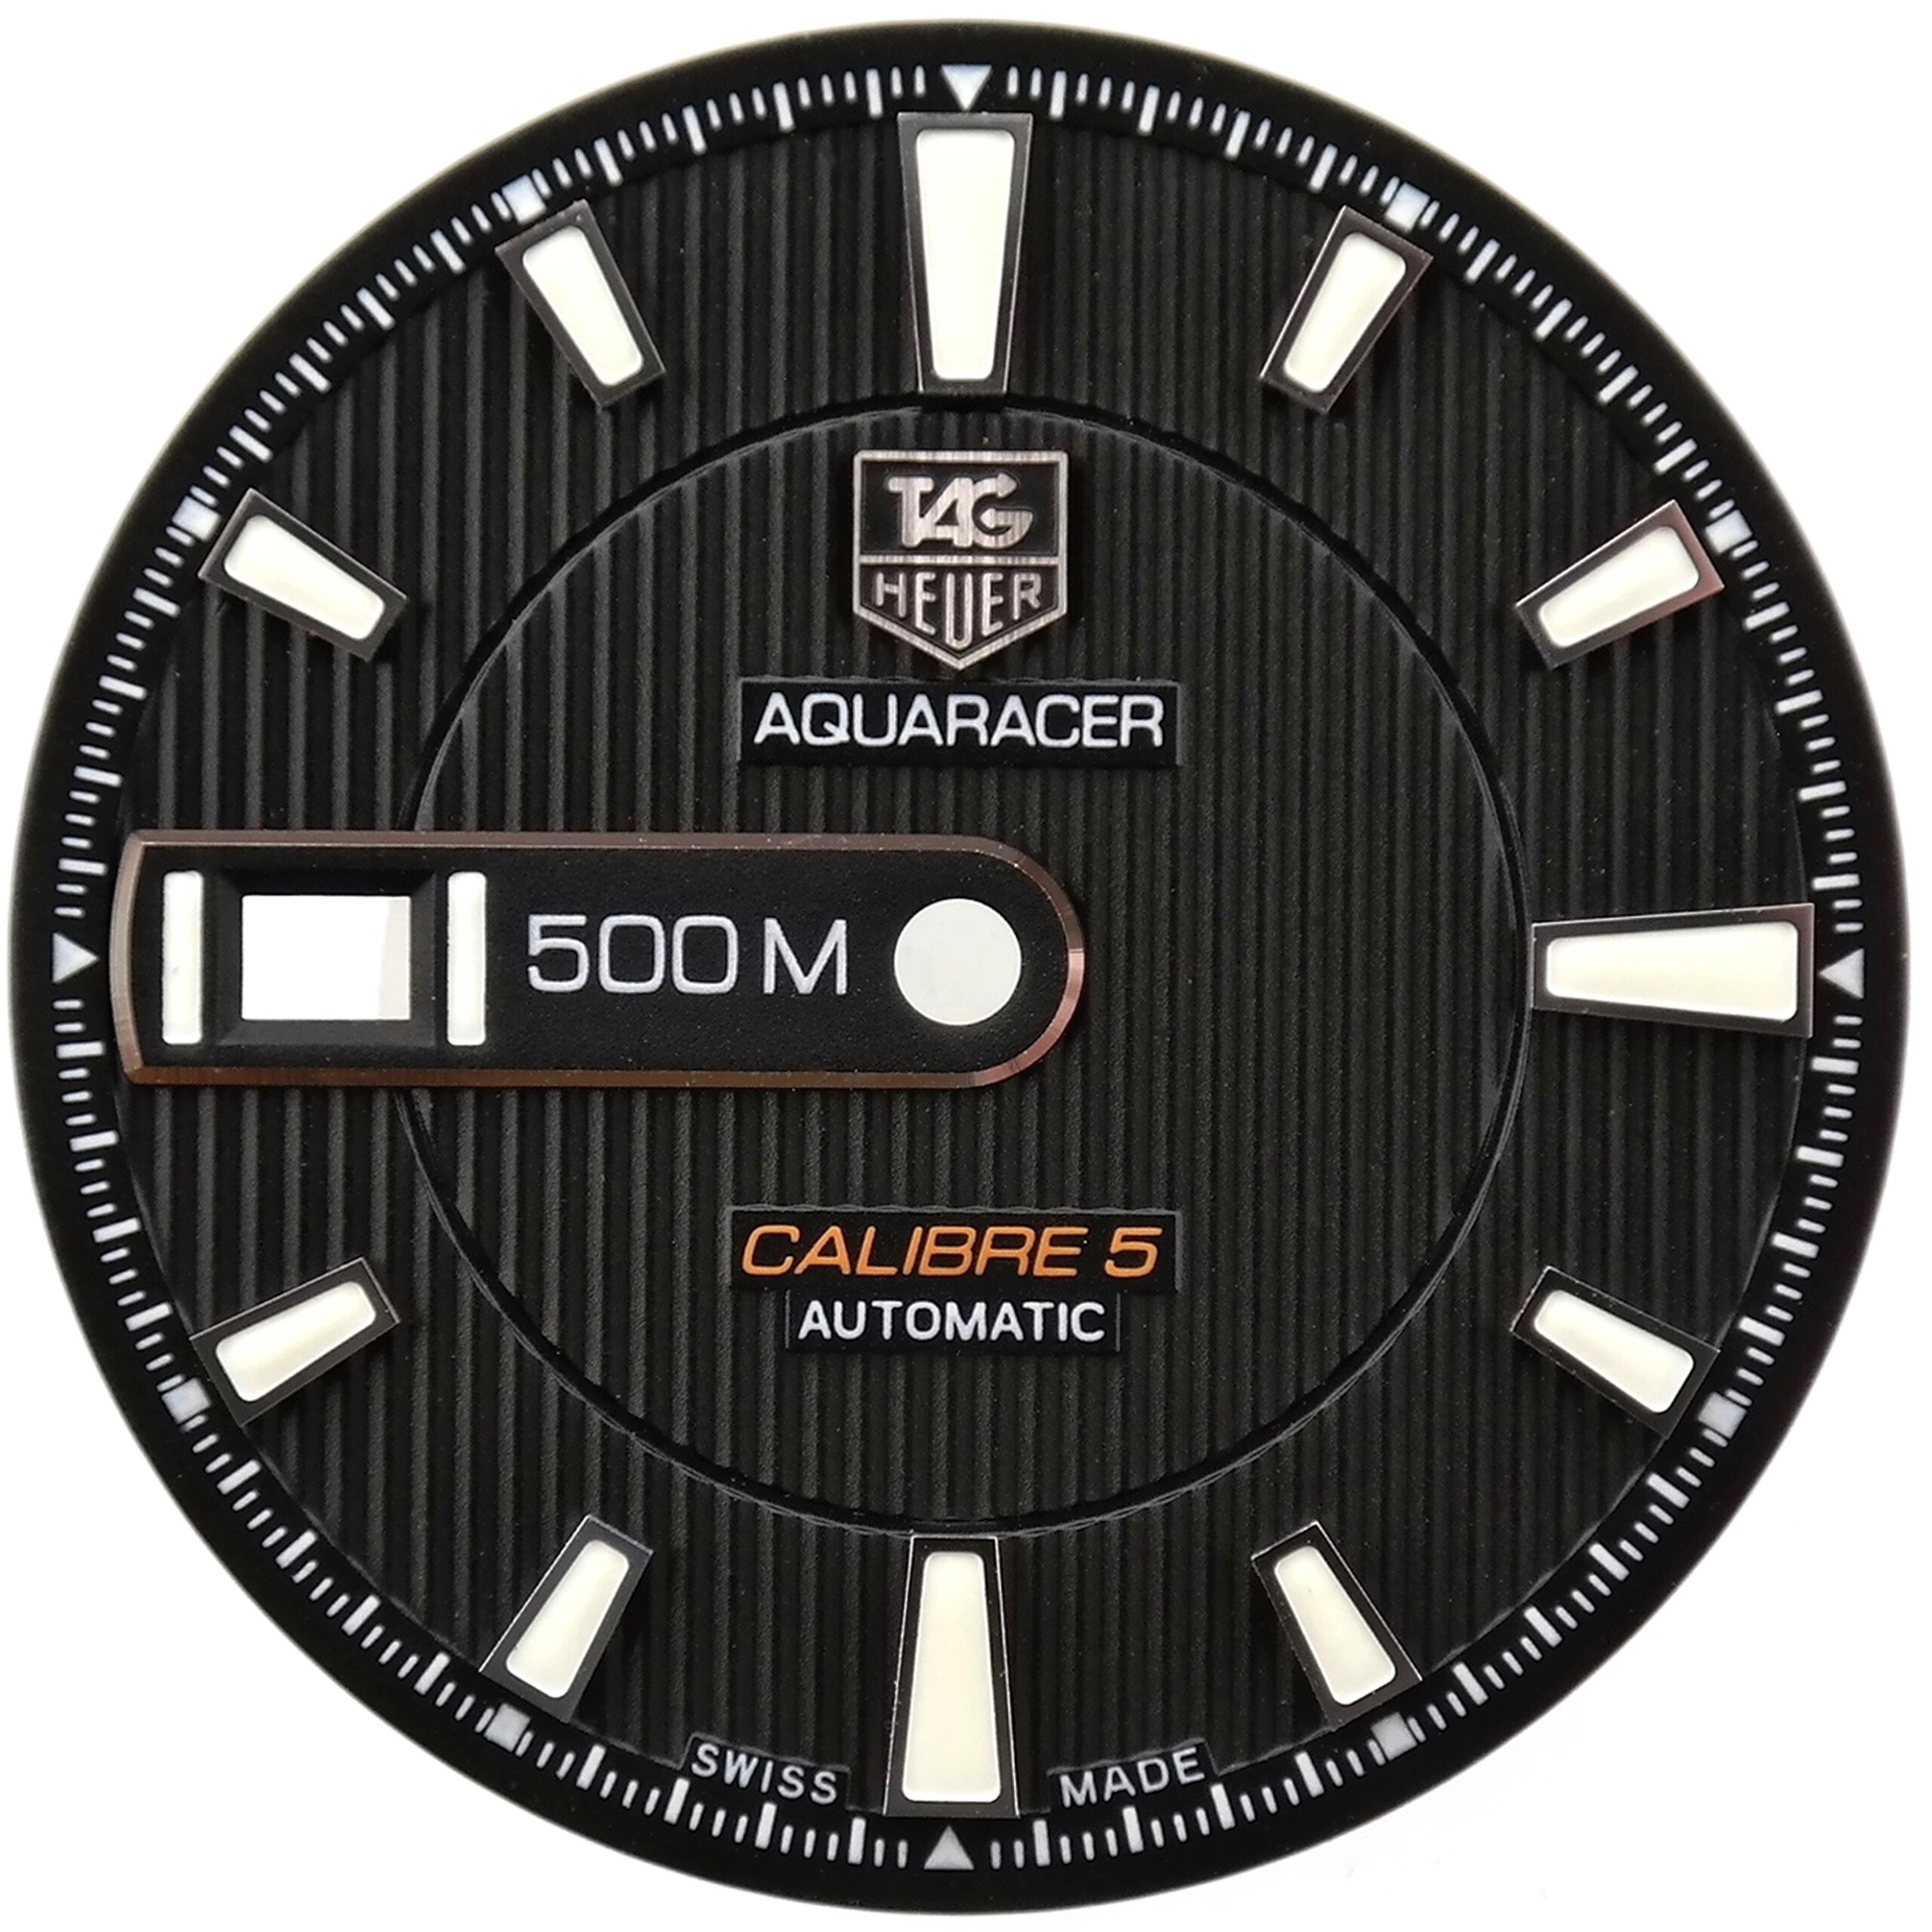 TAG Heuer Aquaracer Calibre 5 Automatic 500 M WAJ2110 Watch Dial Black